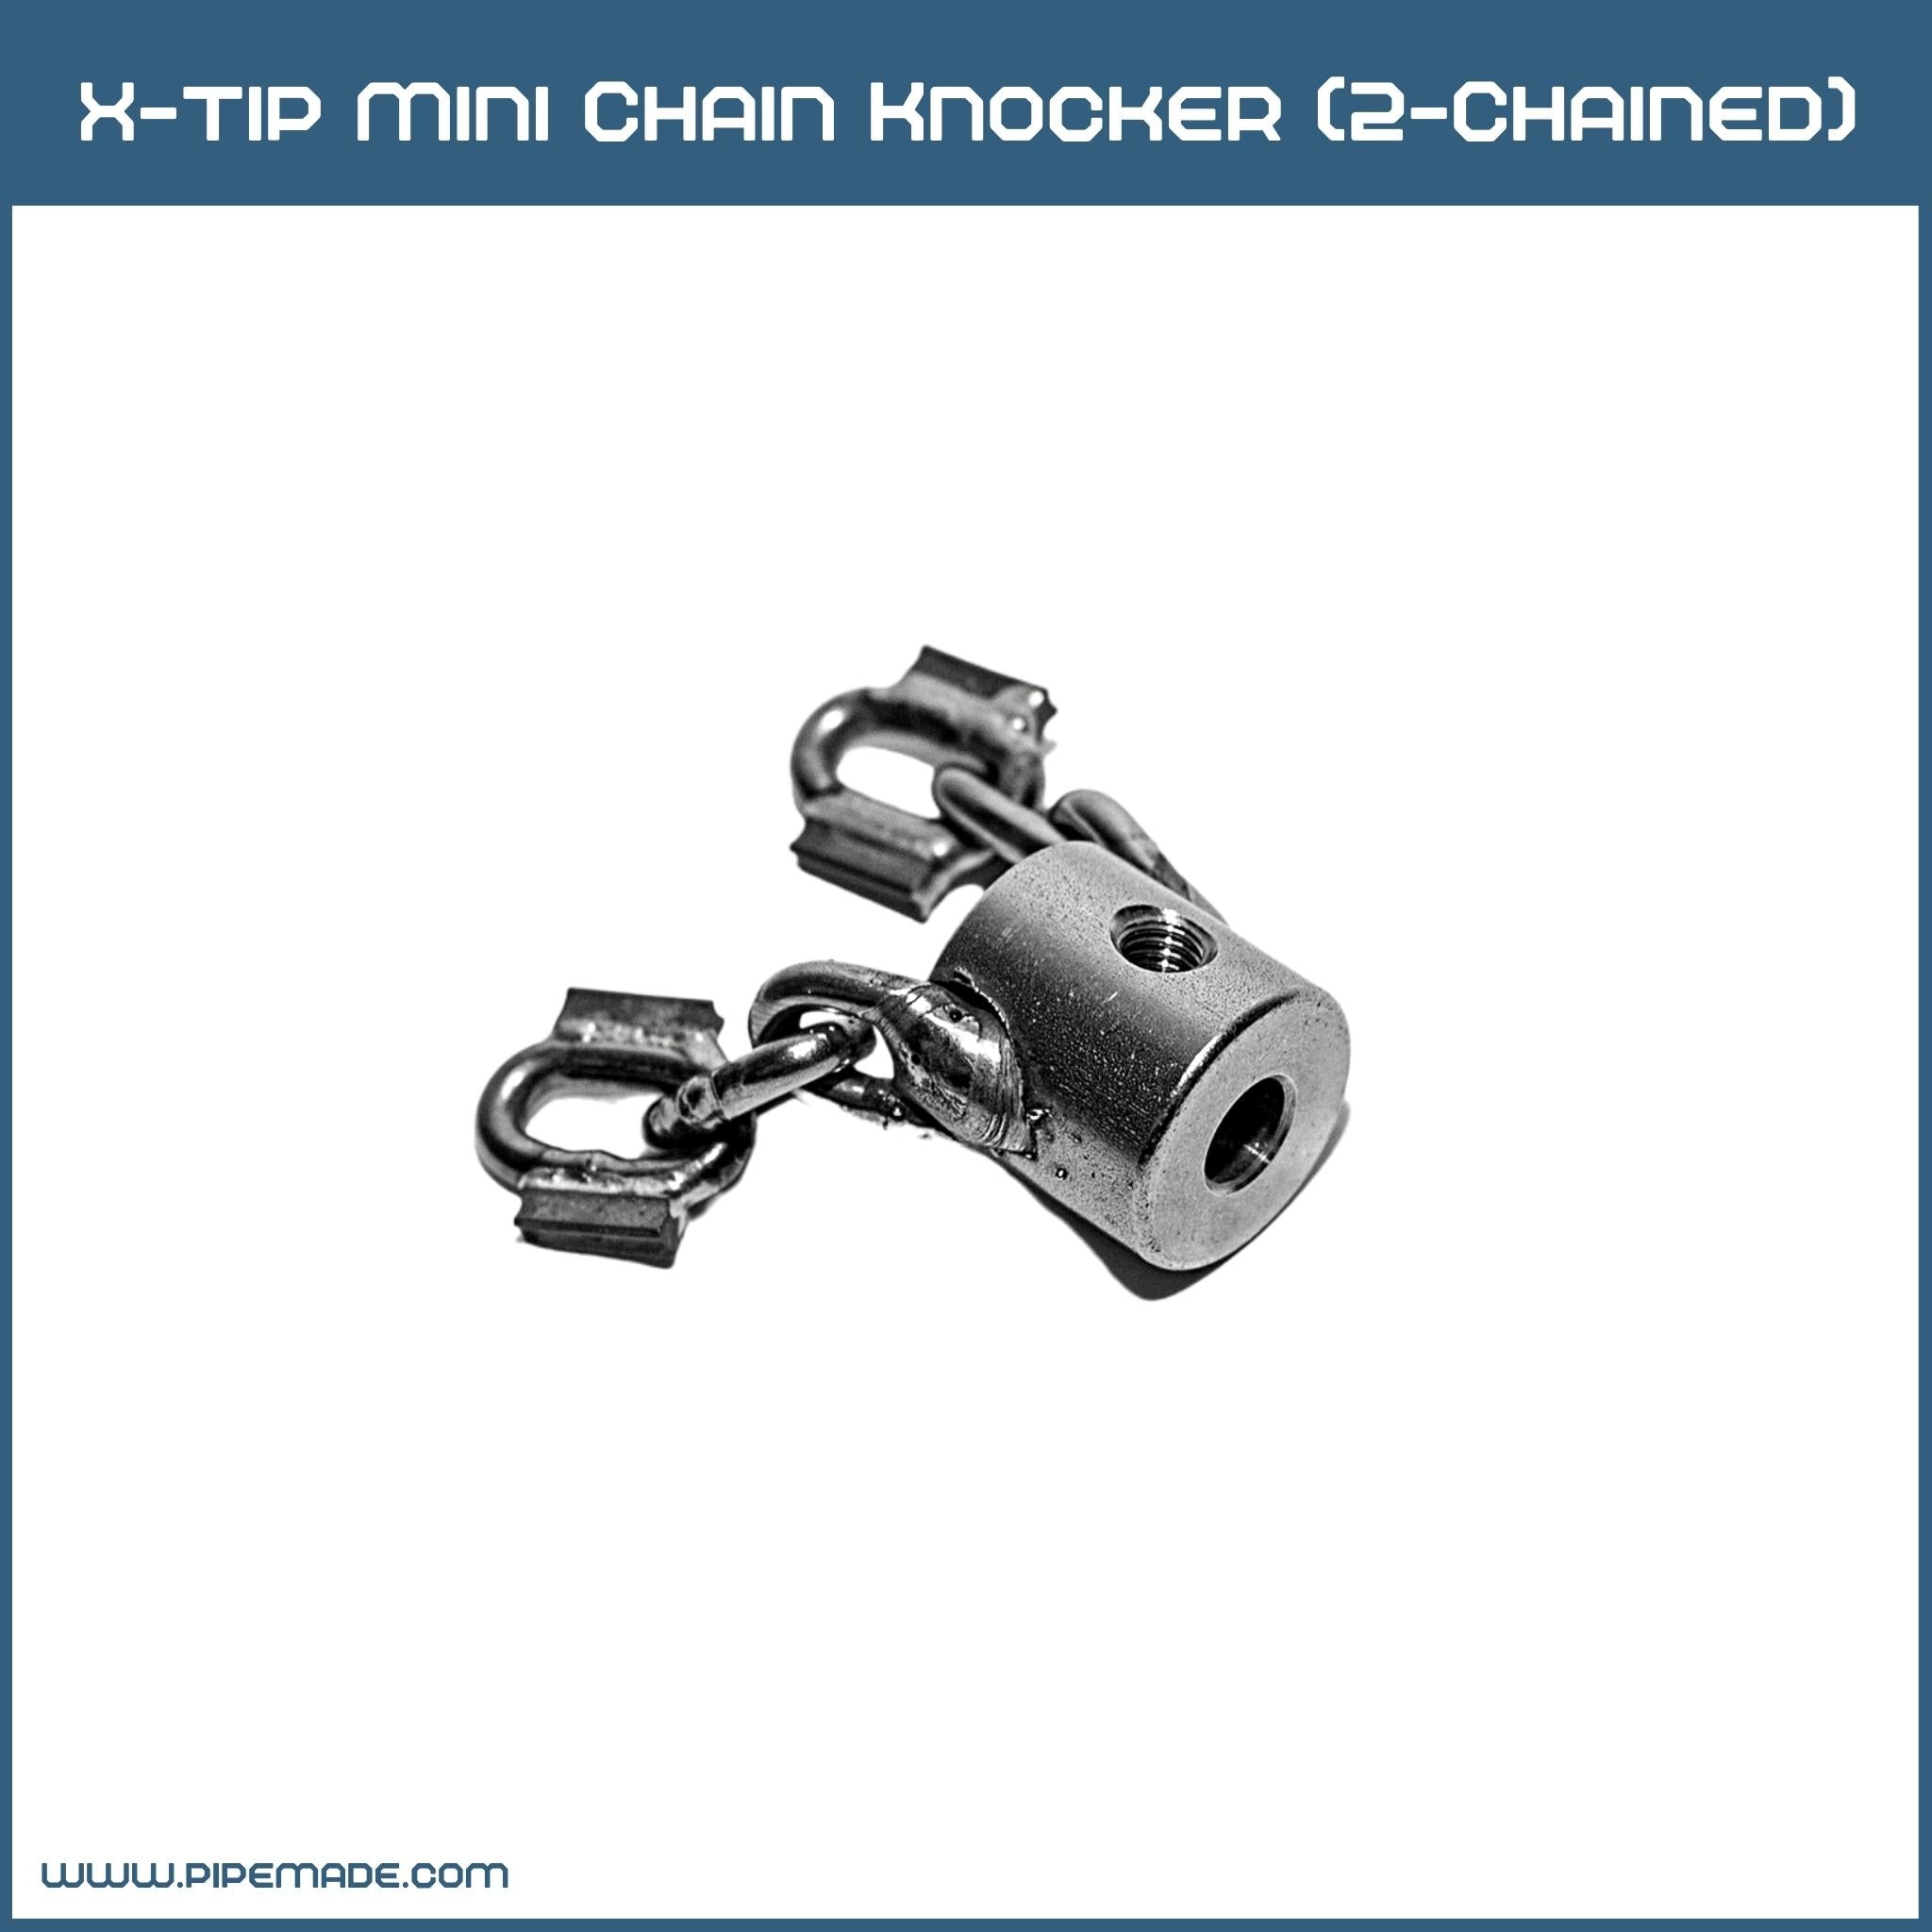 X-Tip Mini Chain Knocker (2-Chained)